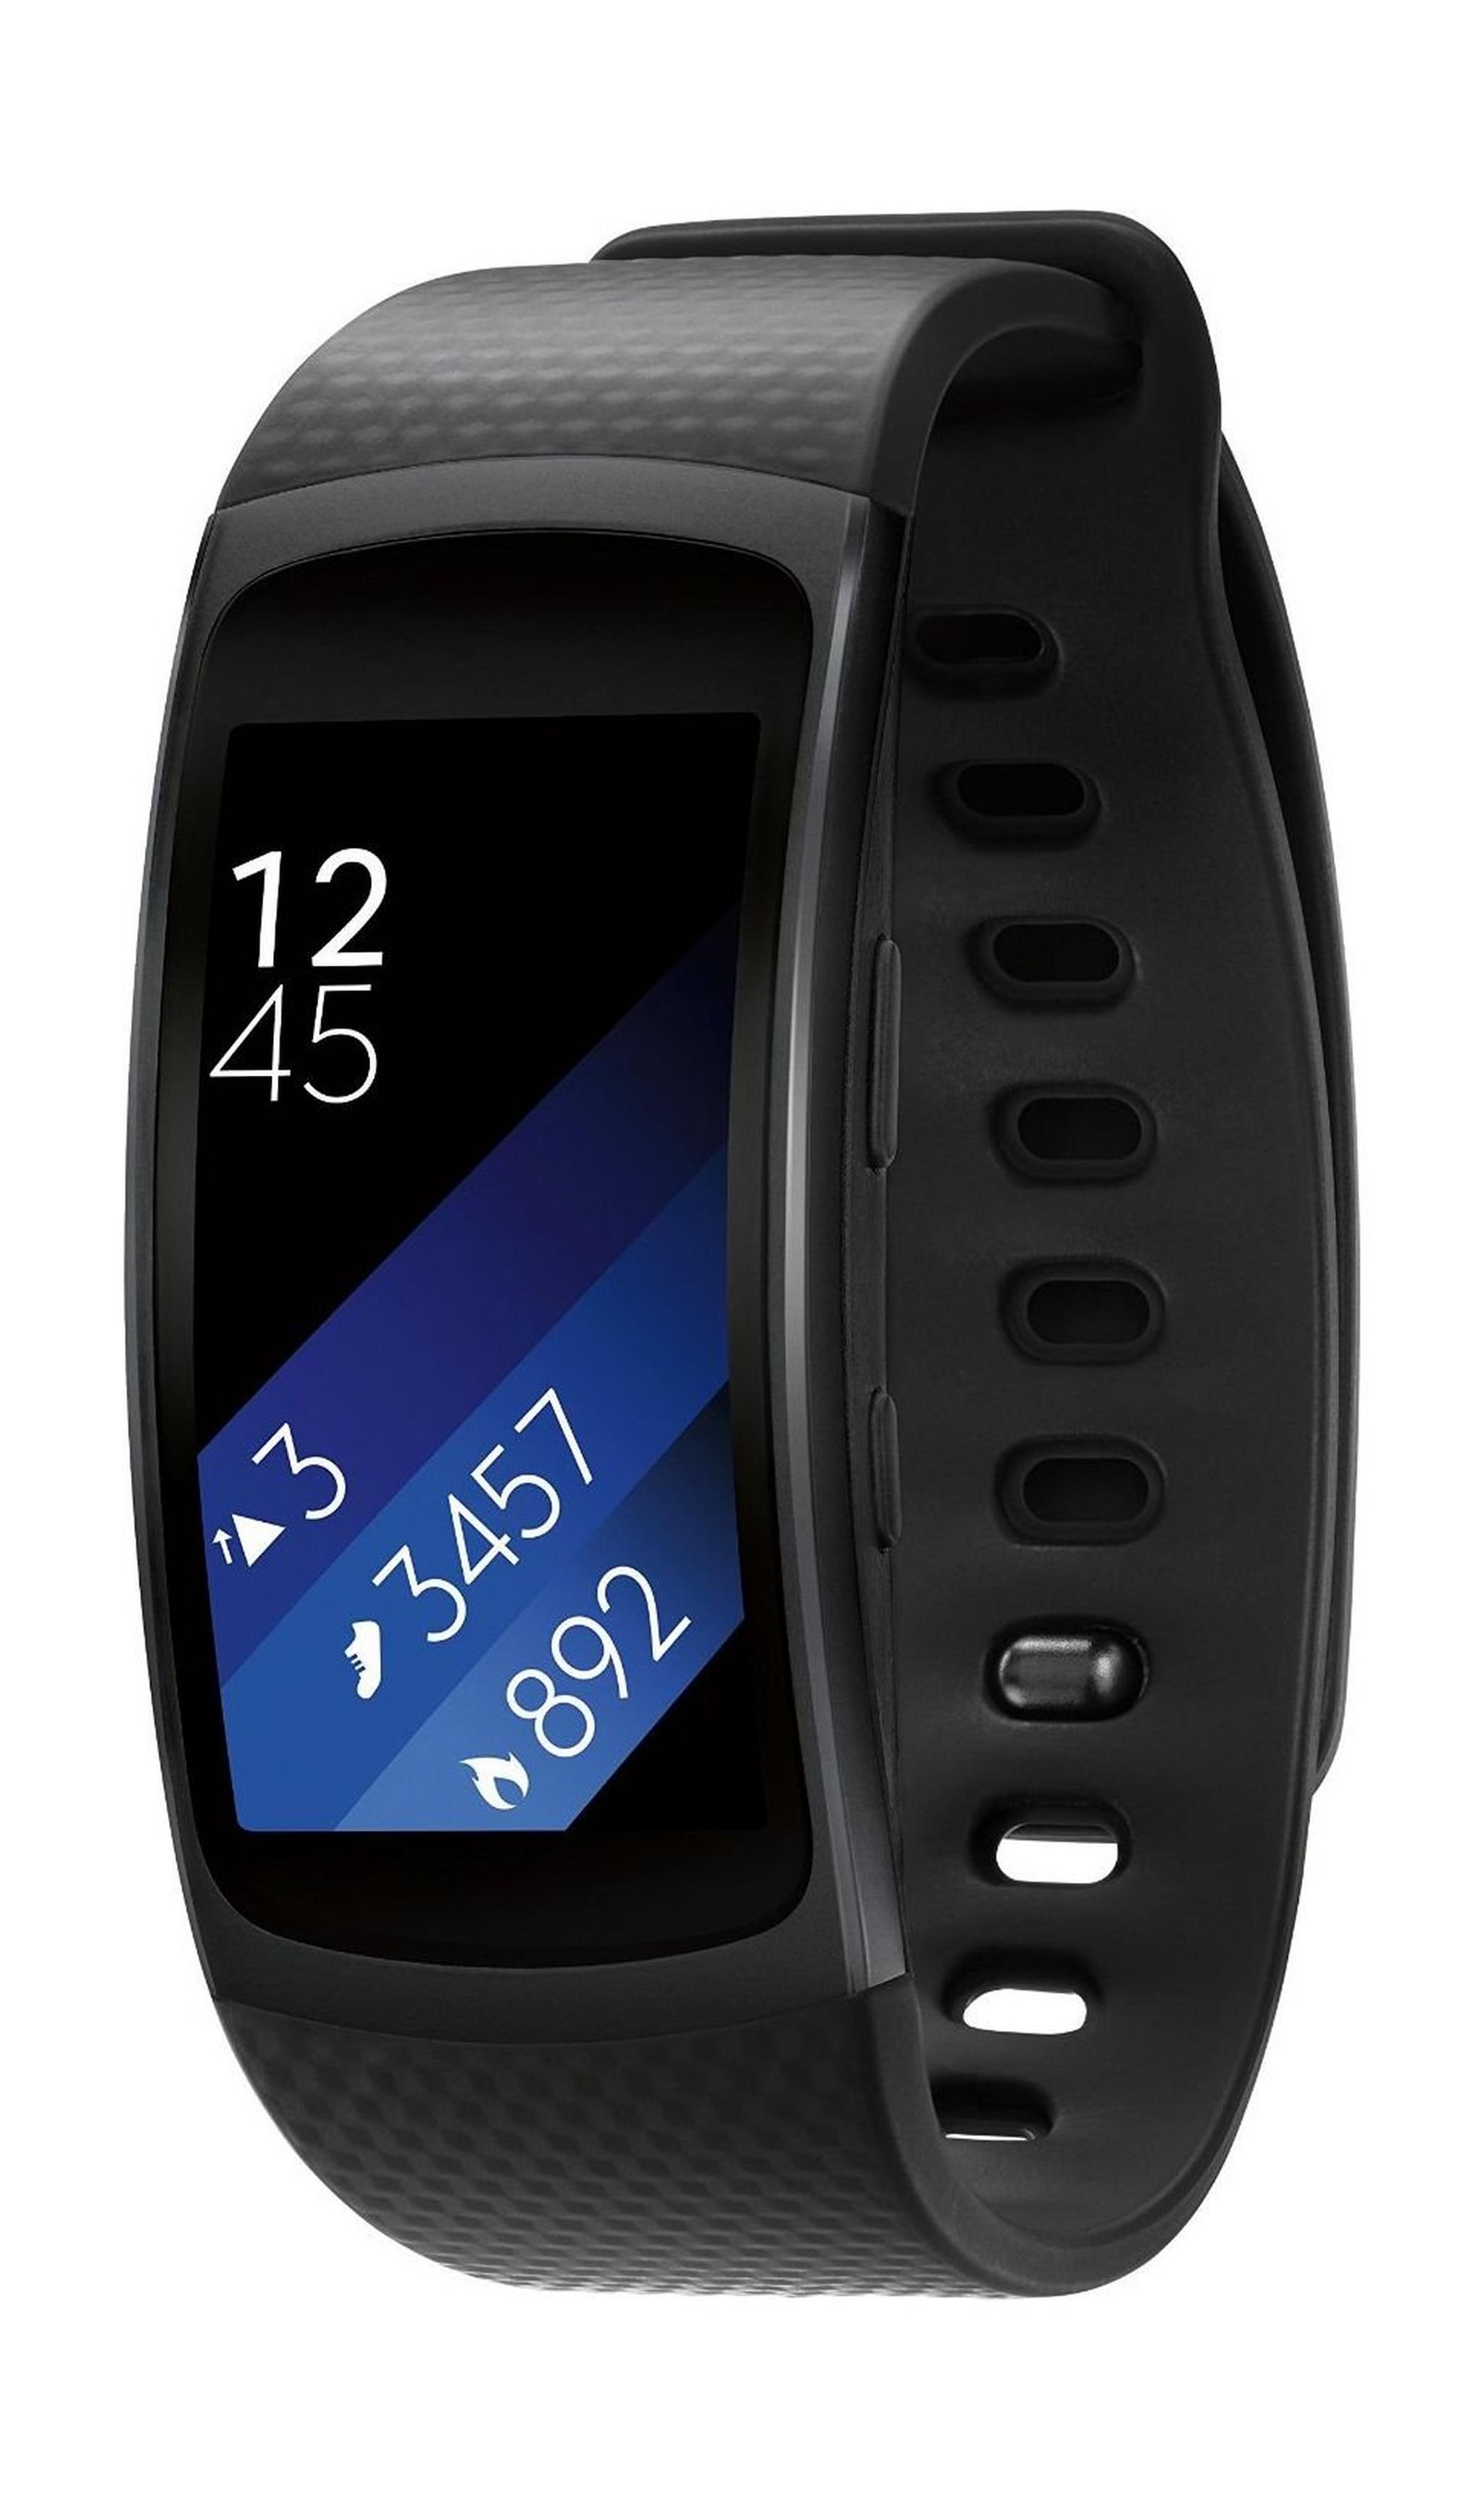 Samsung Gear Fit 2 Fitness Tracker (Small) – Dark Grey